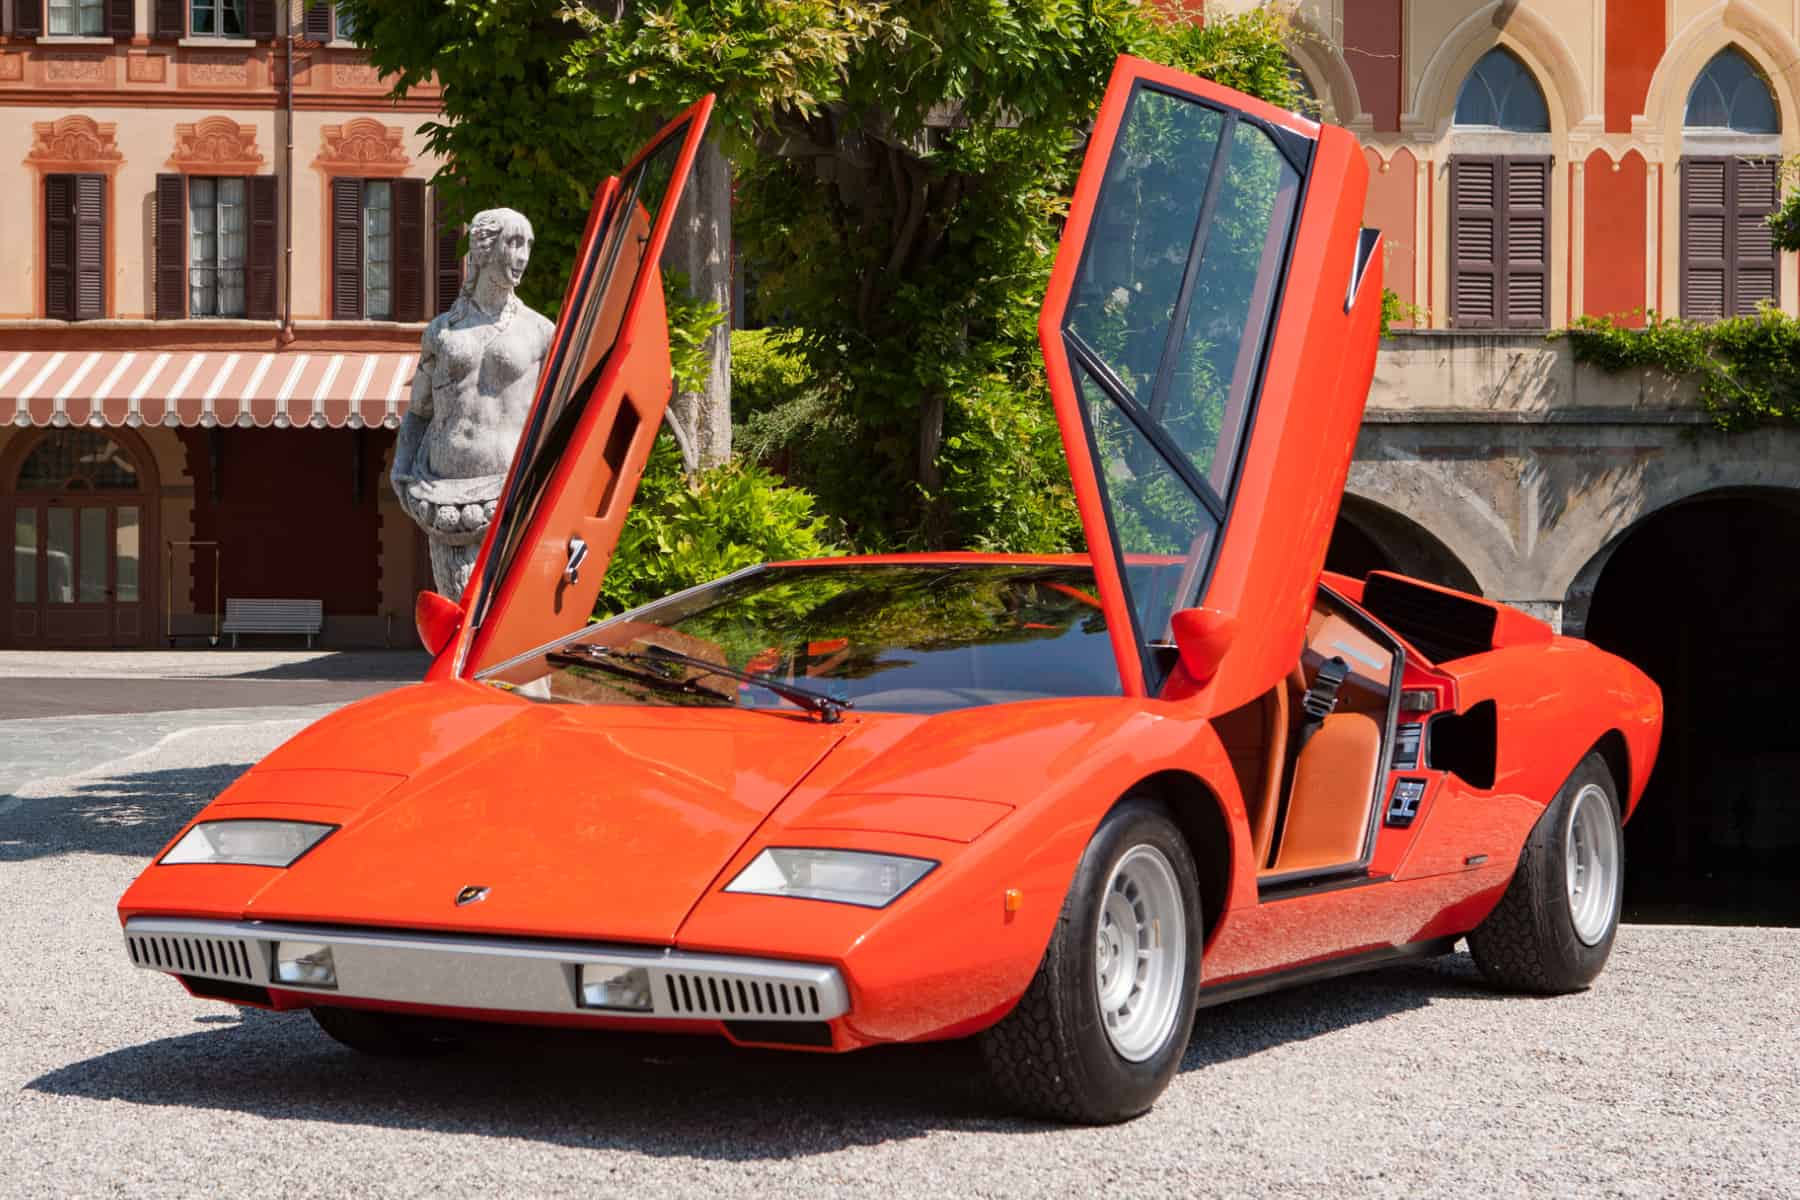 Lamborghini Countach - 50 years on, Gandini's marvel still astonishes